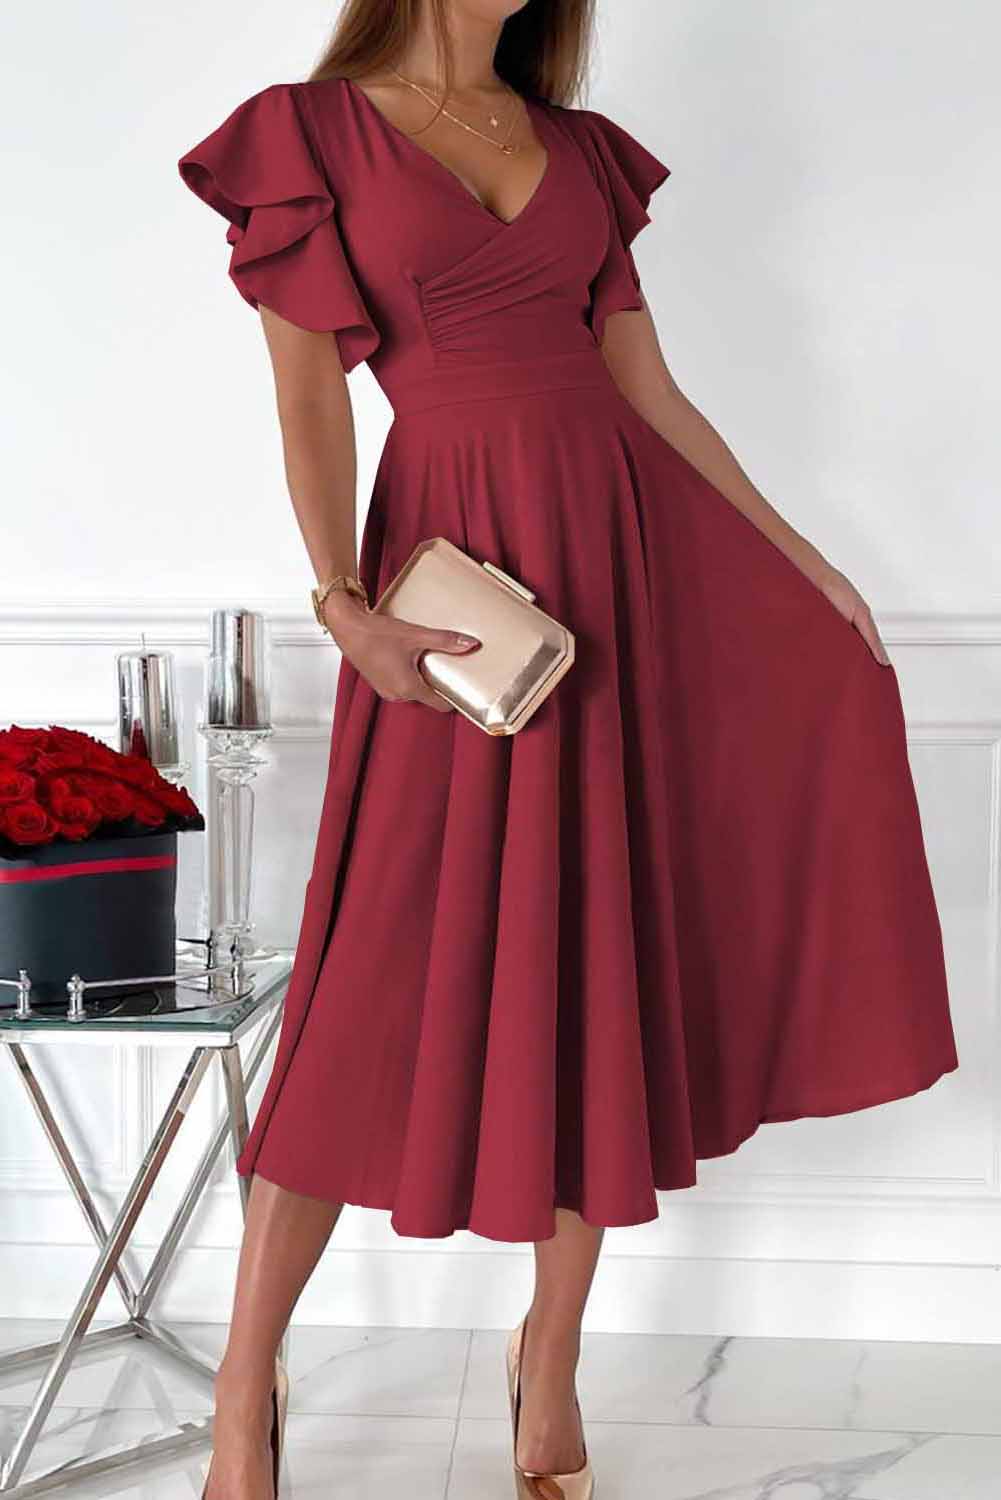 LC6110363-3-S, LC6110363-3-M, LC6110363-3-L, LC6110363-3-XL, LC6110363-3-2XL, Red Womens V Neck Ruffle Sleeve Wrap Dress Midi Dress Cocktail Party Dress